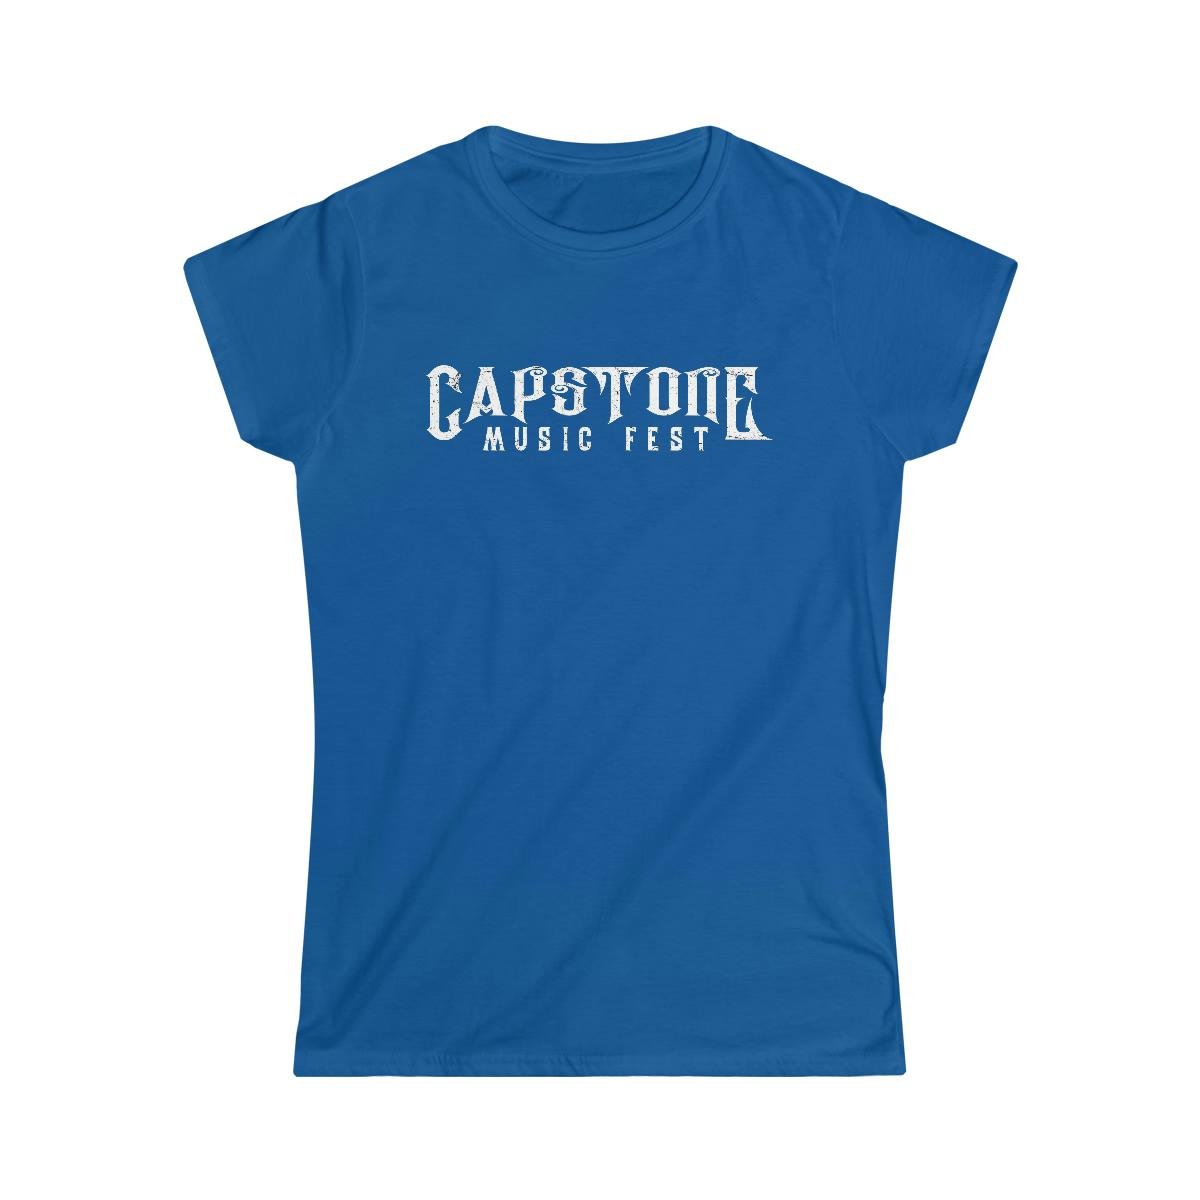 Capstone Music Fest Grunge Logo Women’s Short Sleeve Tshirt